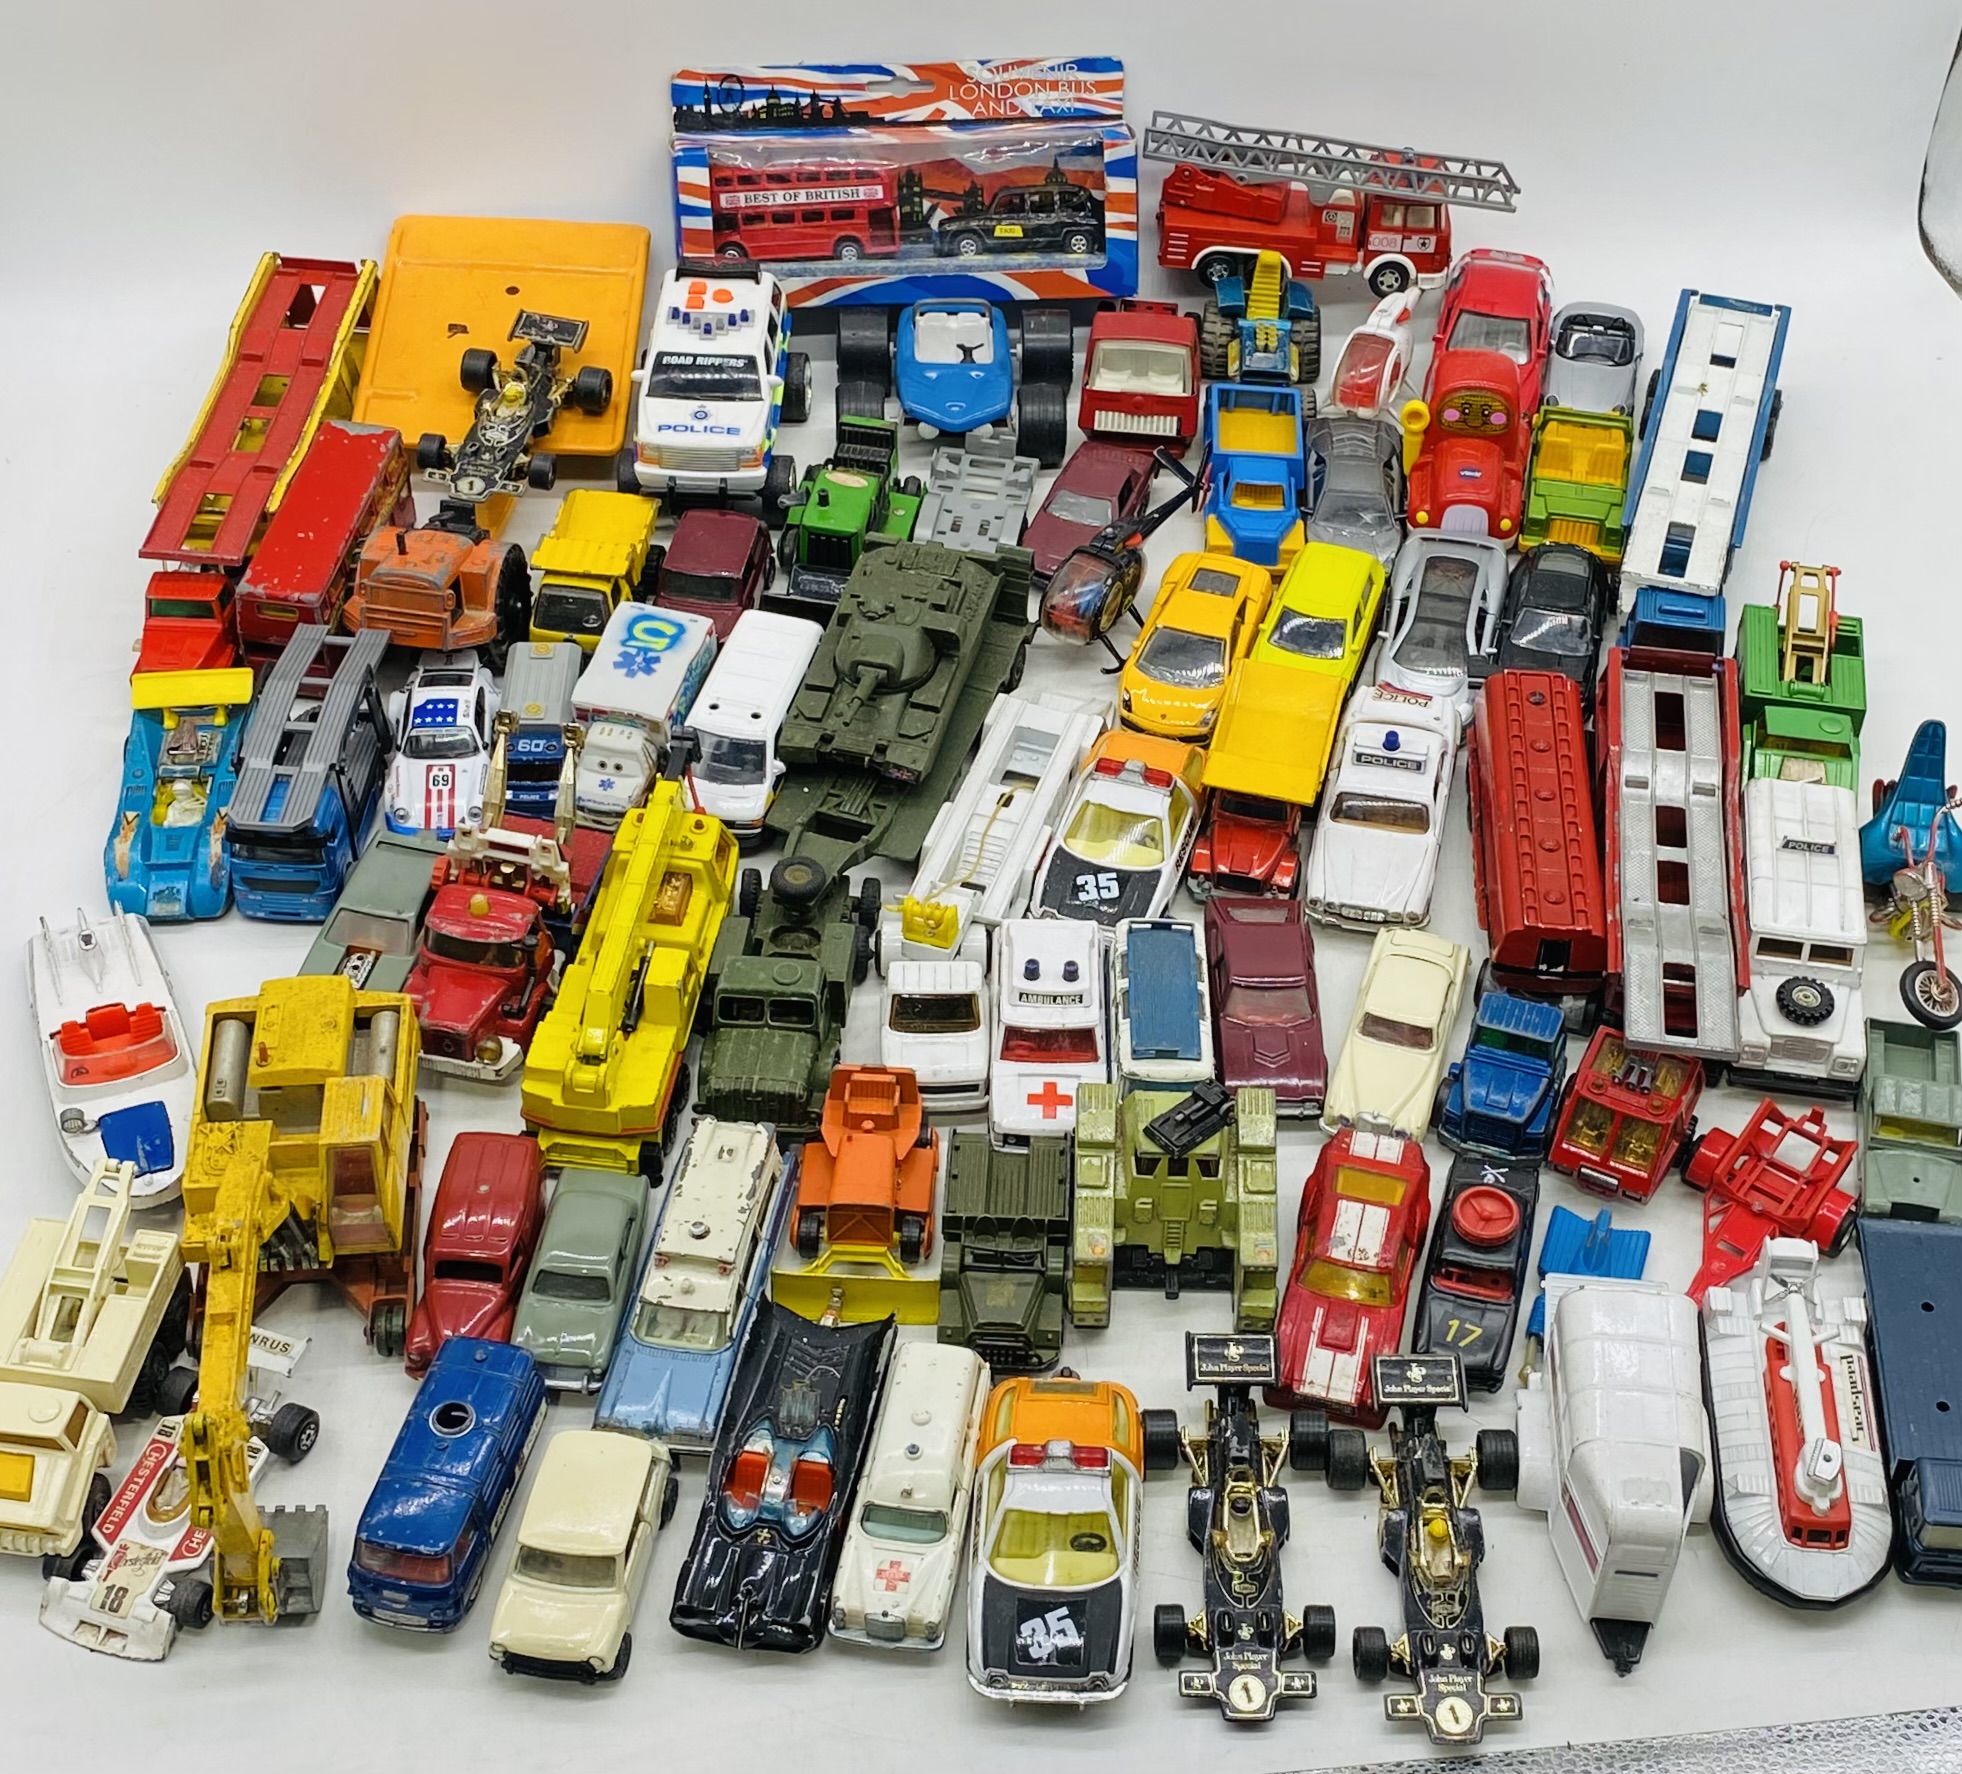 A collection of playworn die-cast vehicles including Matchbox, Tonka, Corgi Toys, Lesney etc